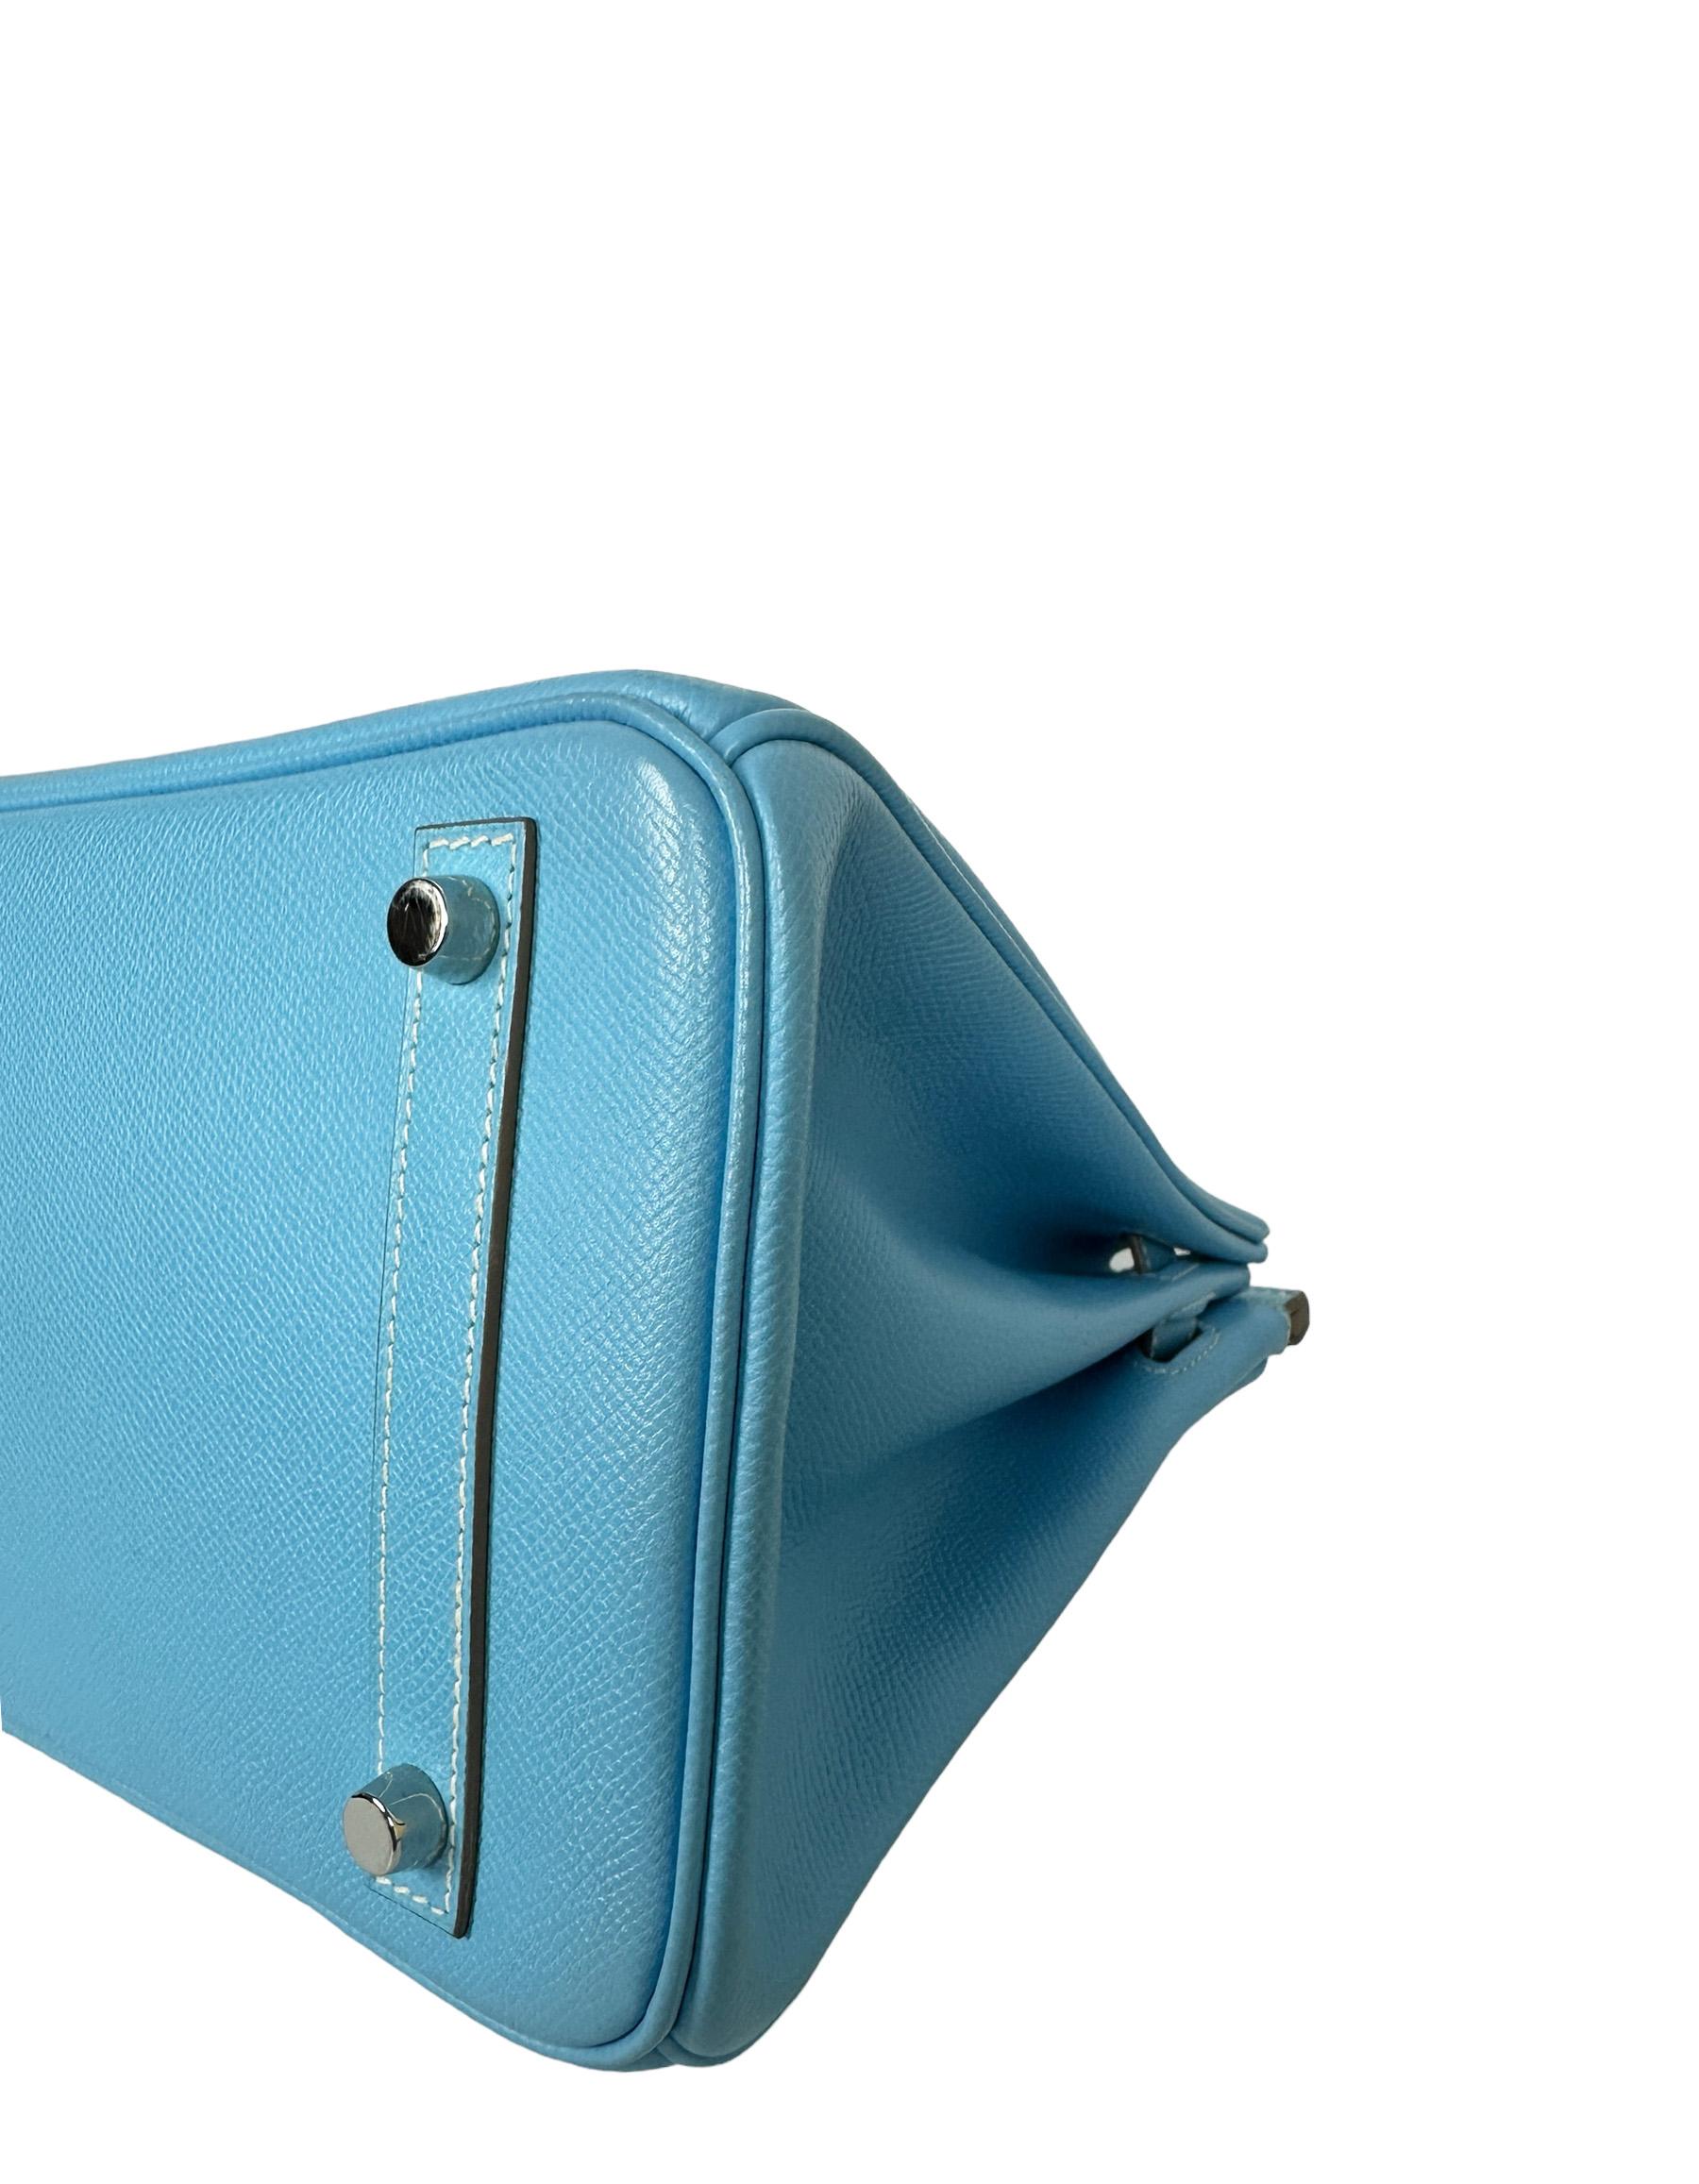 Hermes Blue Celeste/ Mykonos Epsom Leather 30cm Candy Birkin Bag PHW 2